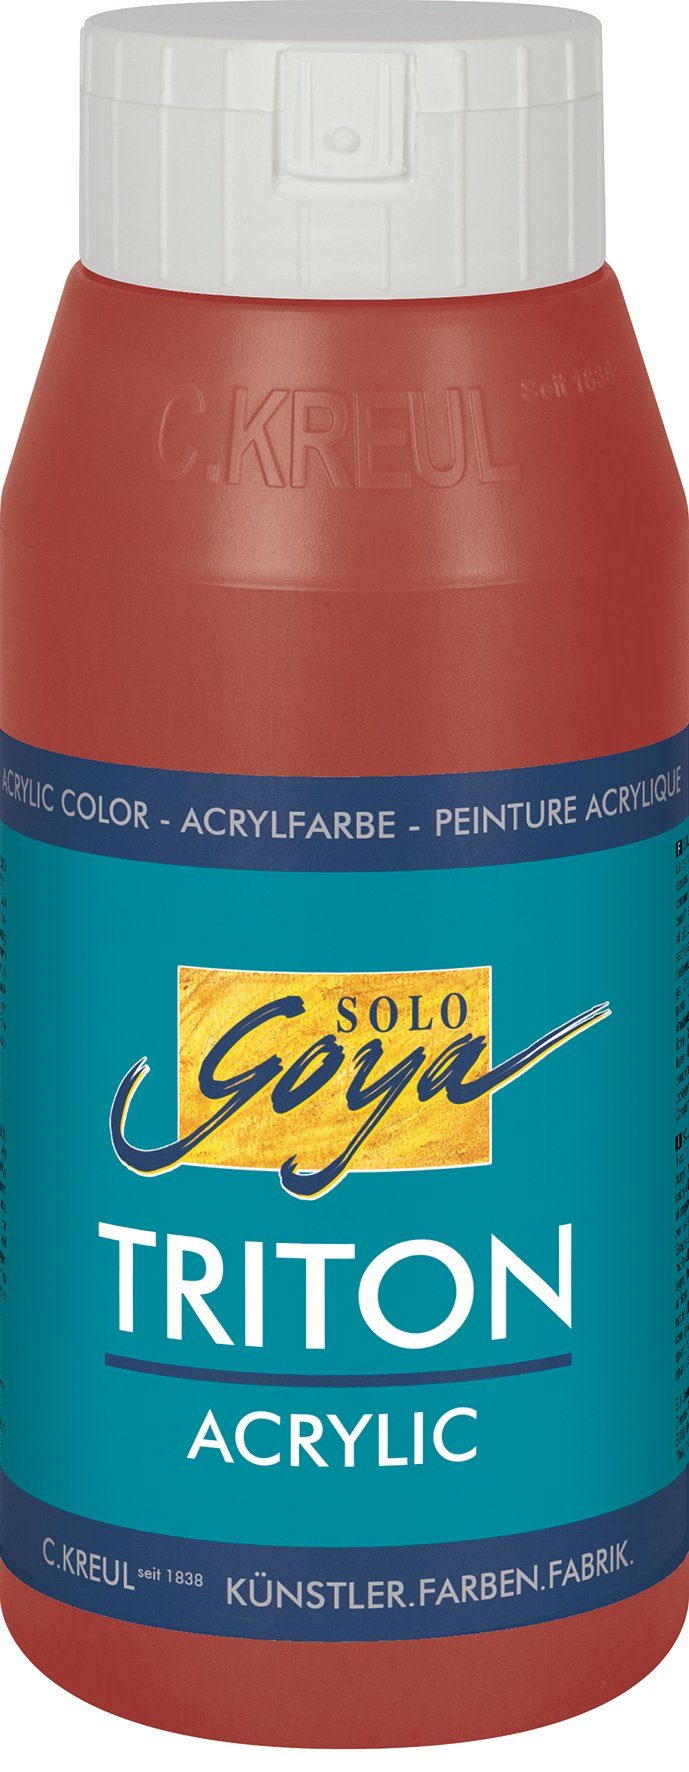 Acrylic, ml 750 Goya Oxydrot Solo Kreul Acrylfarbe Triton